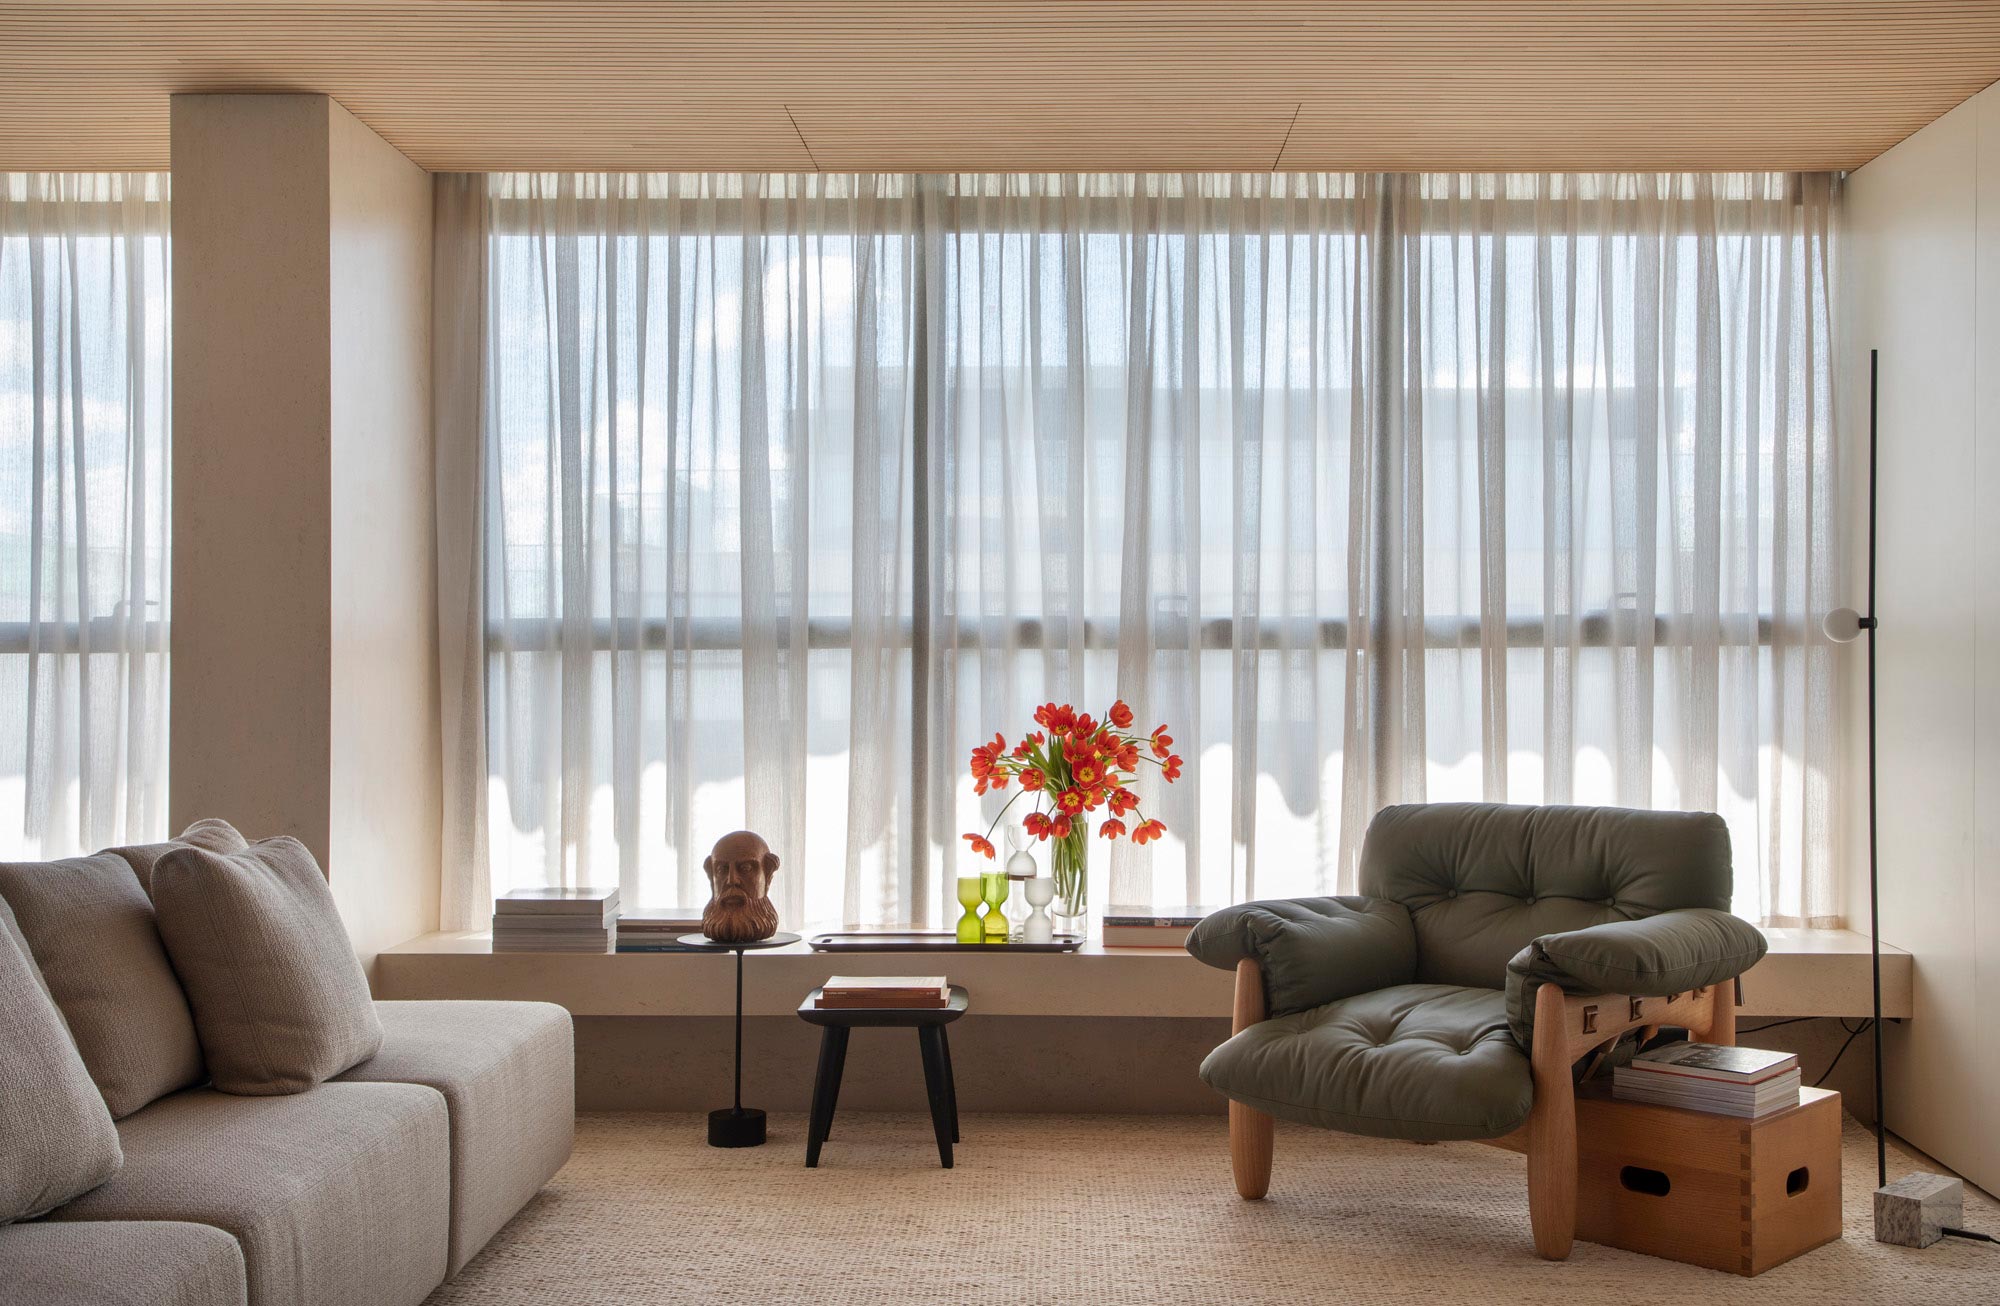 Image of cobertura bsb sainz arquitectura 20 in Livings Room - Cosentino